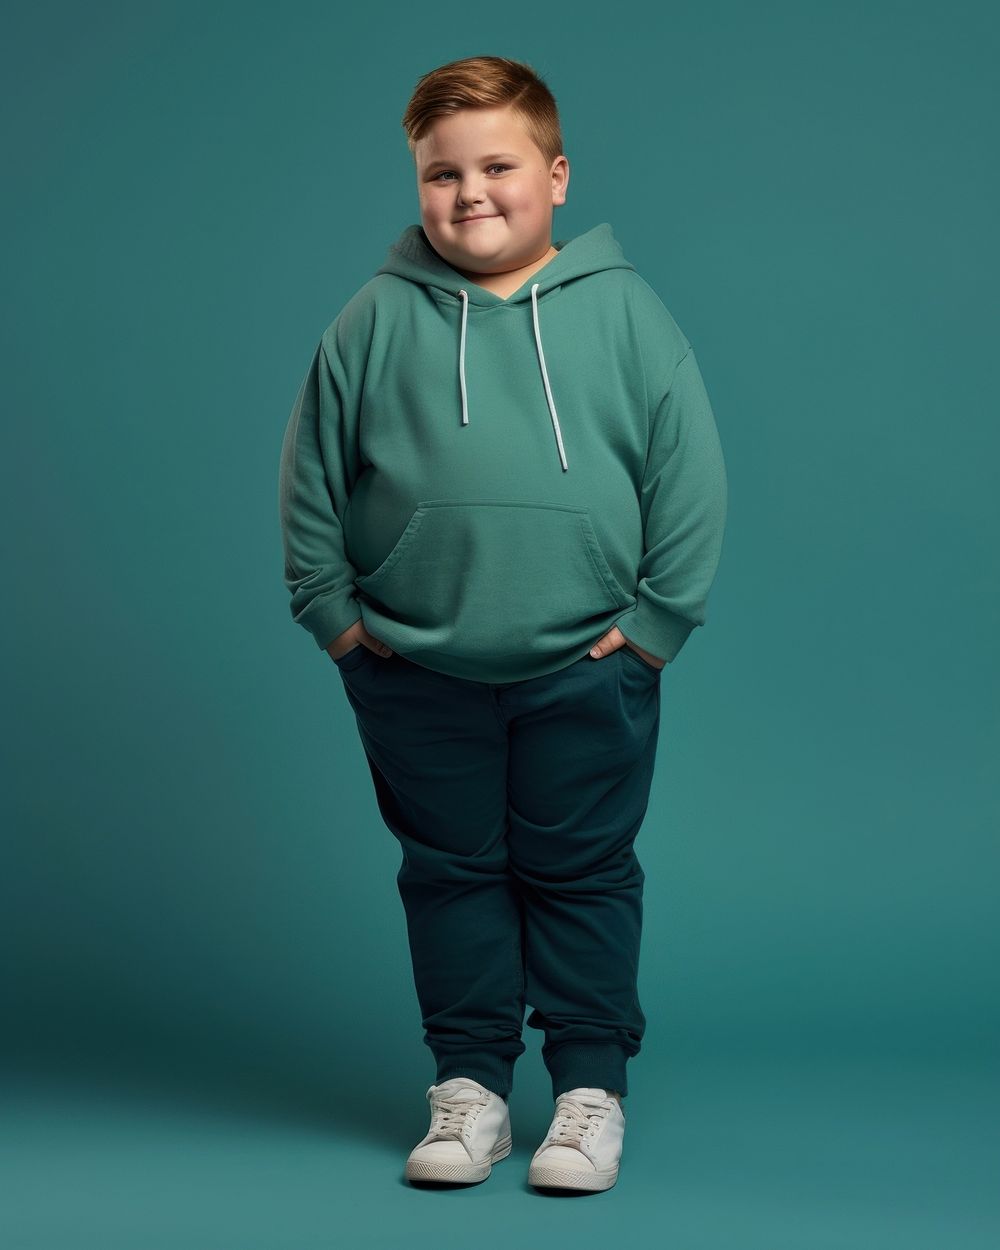 Standing sweatshirt child kid. AI generated Image by rawpixel.